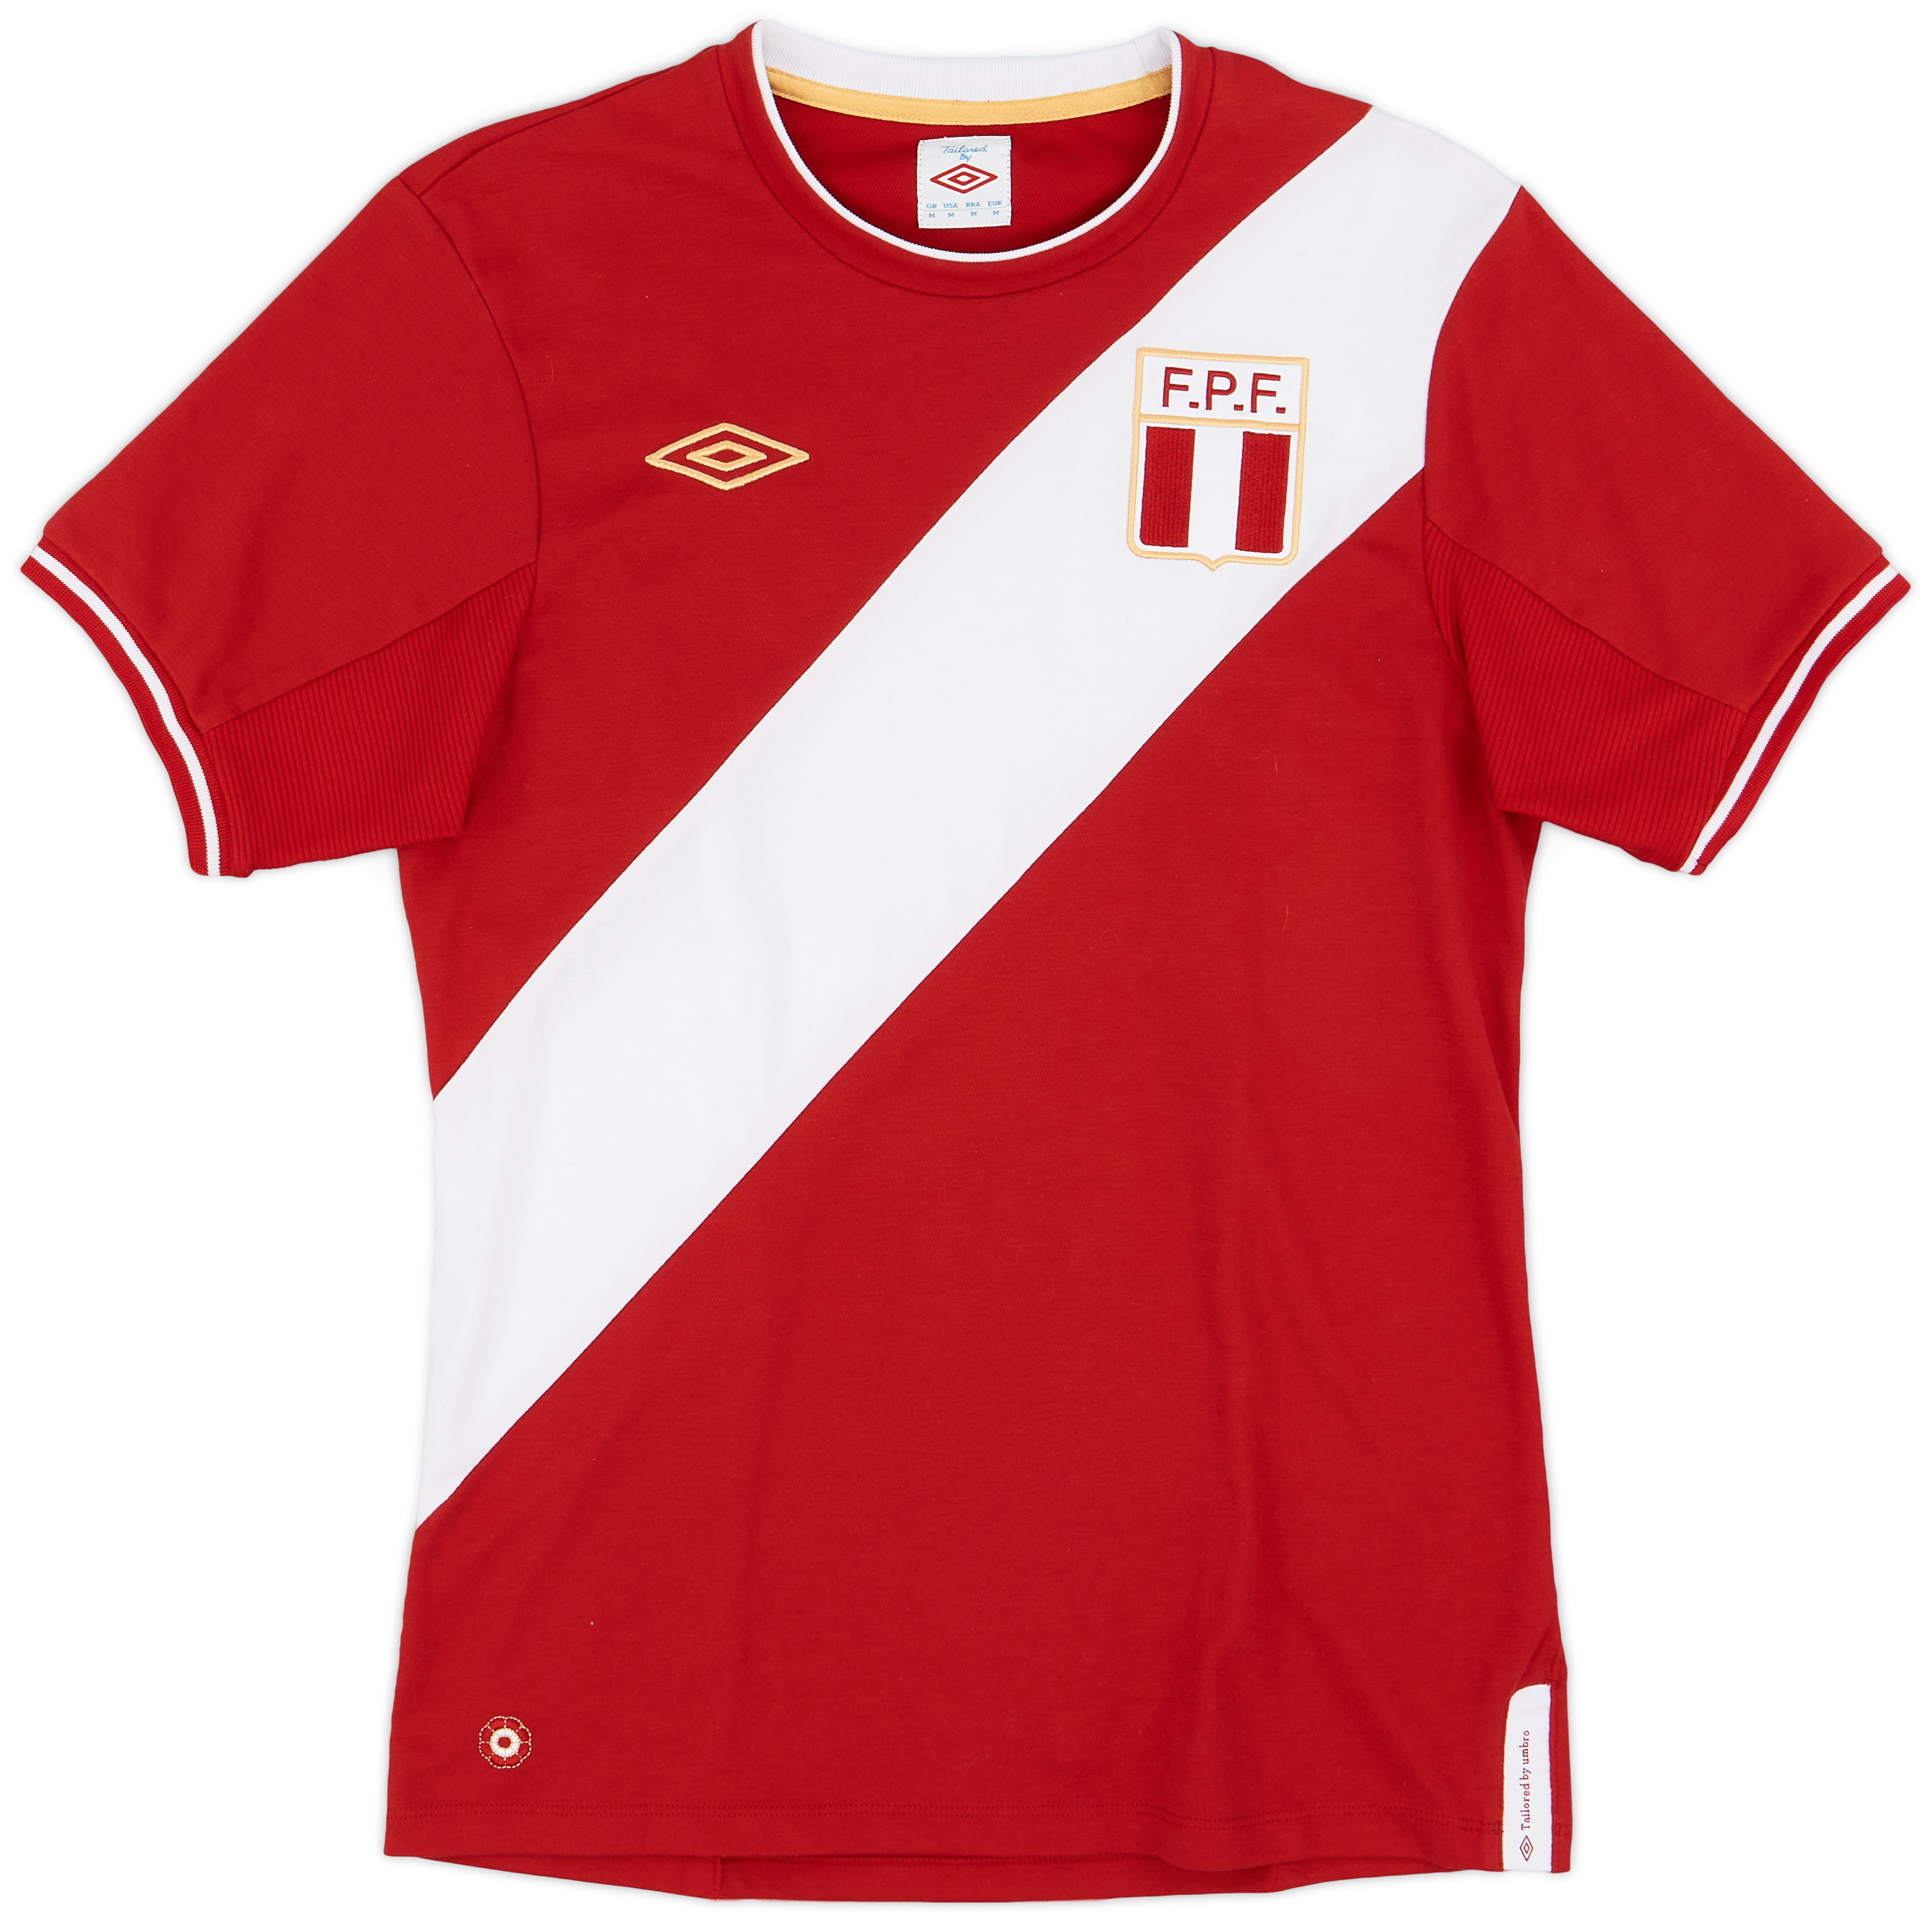 2011 Peru Away Shirt - 9/10 - ()